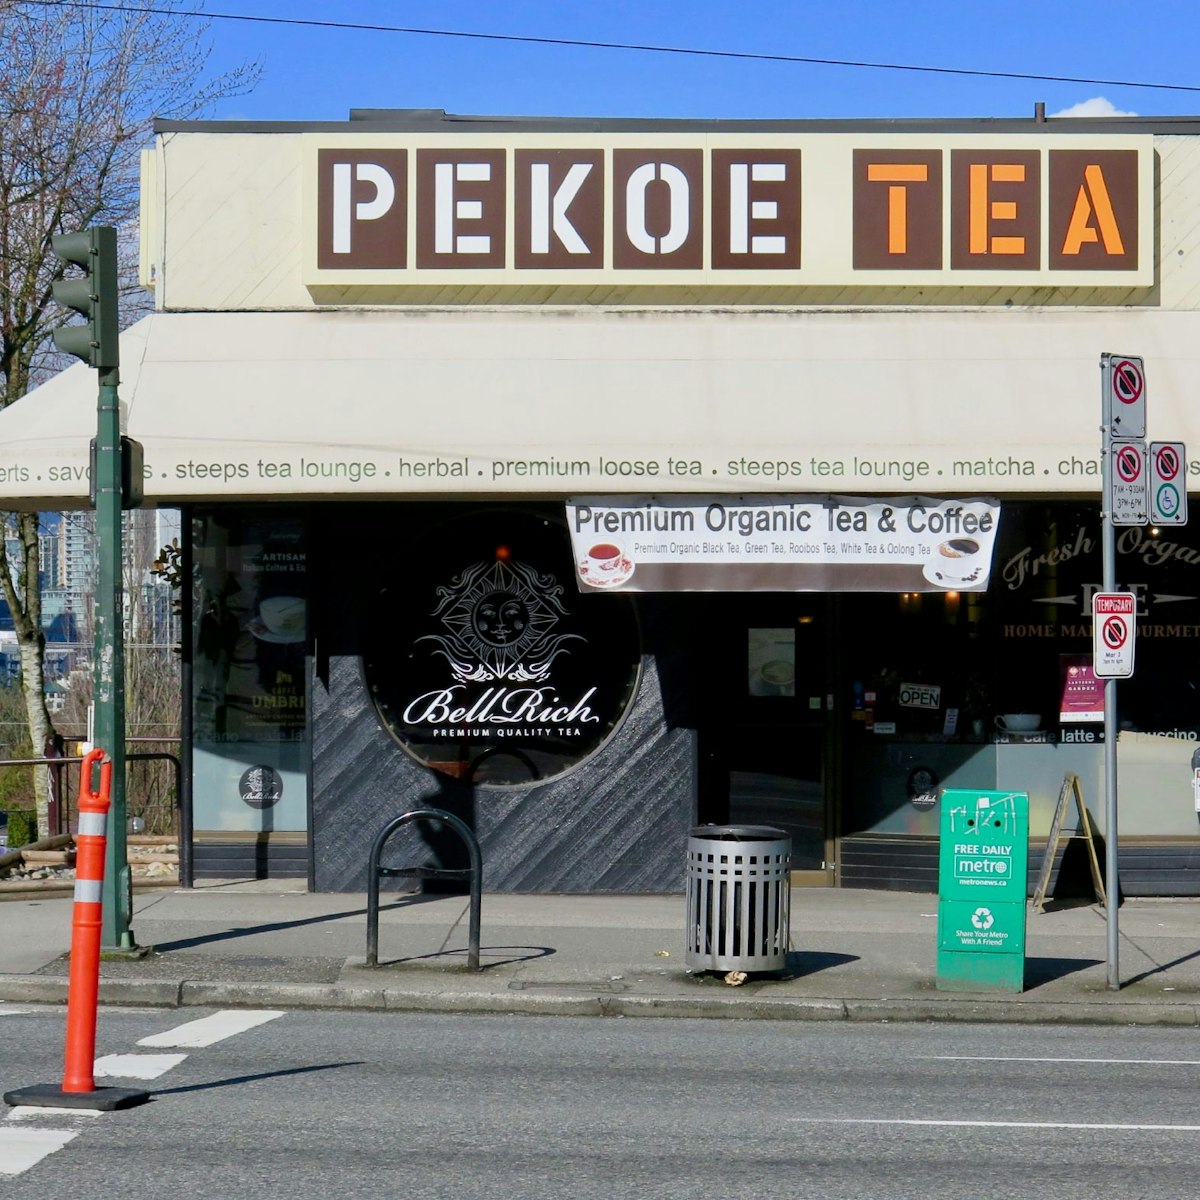 Exterior of Pekoe Tea Lounge café